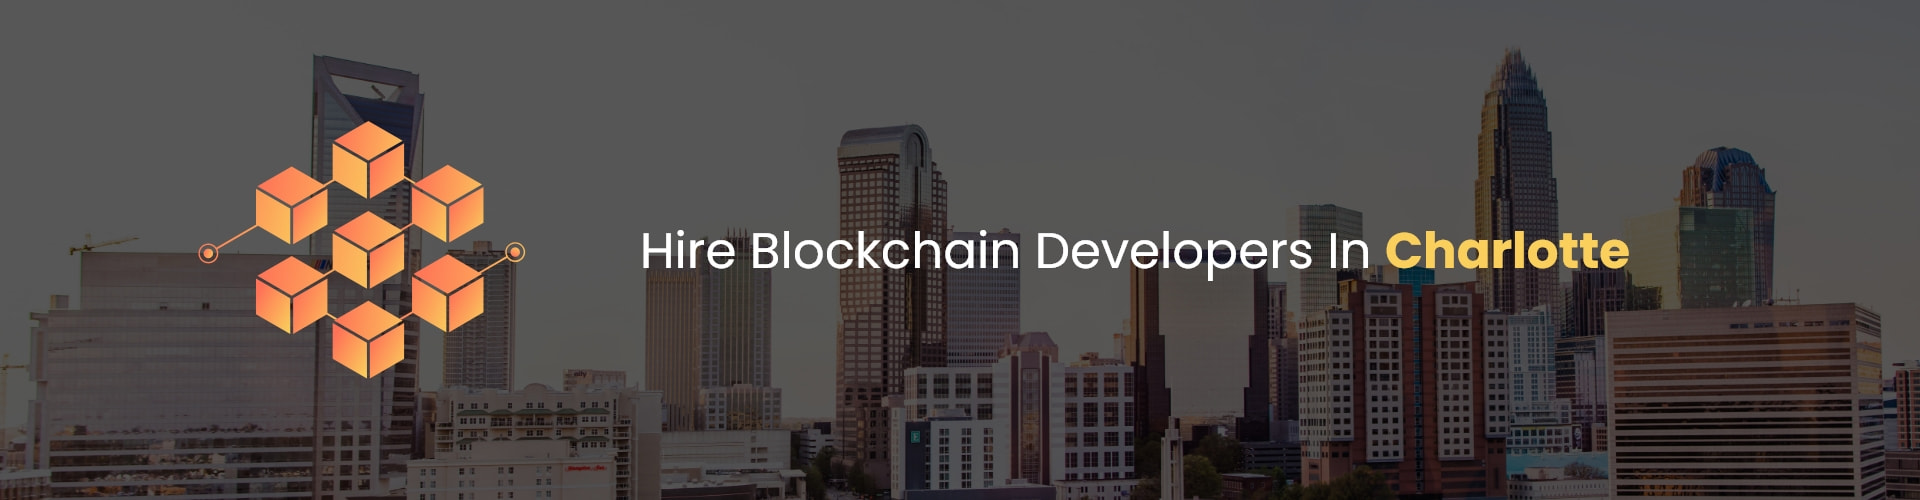 hire blockchain developers in charlotte